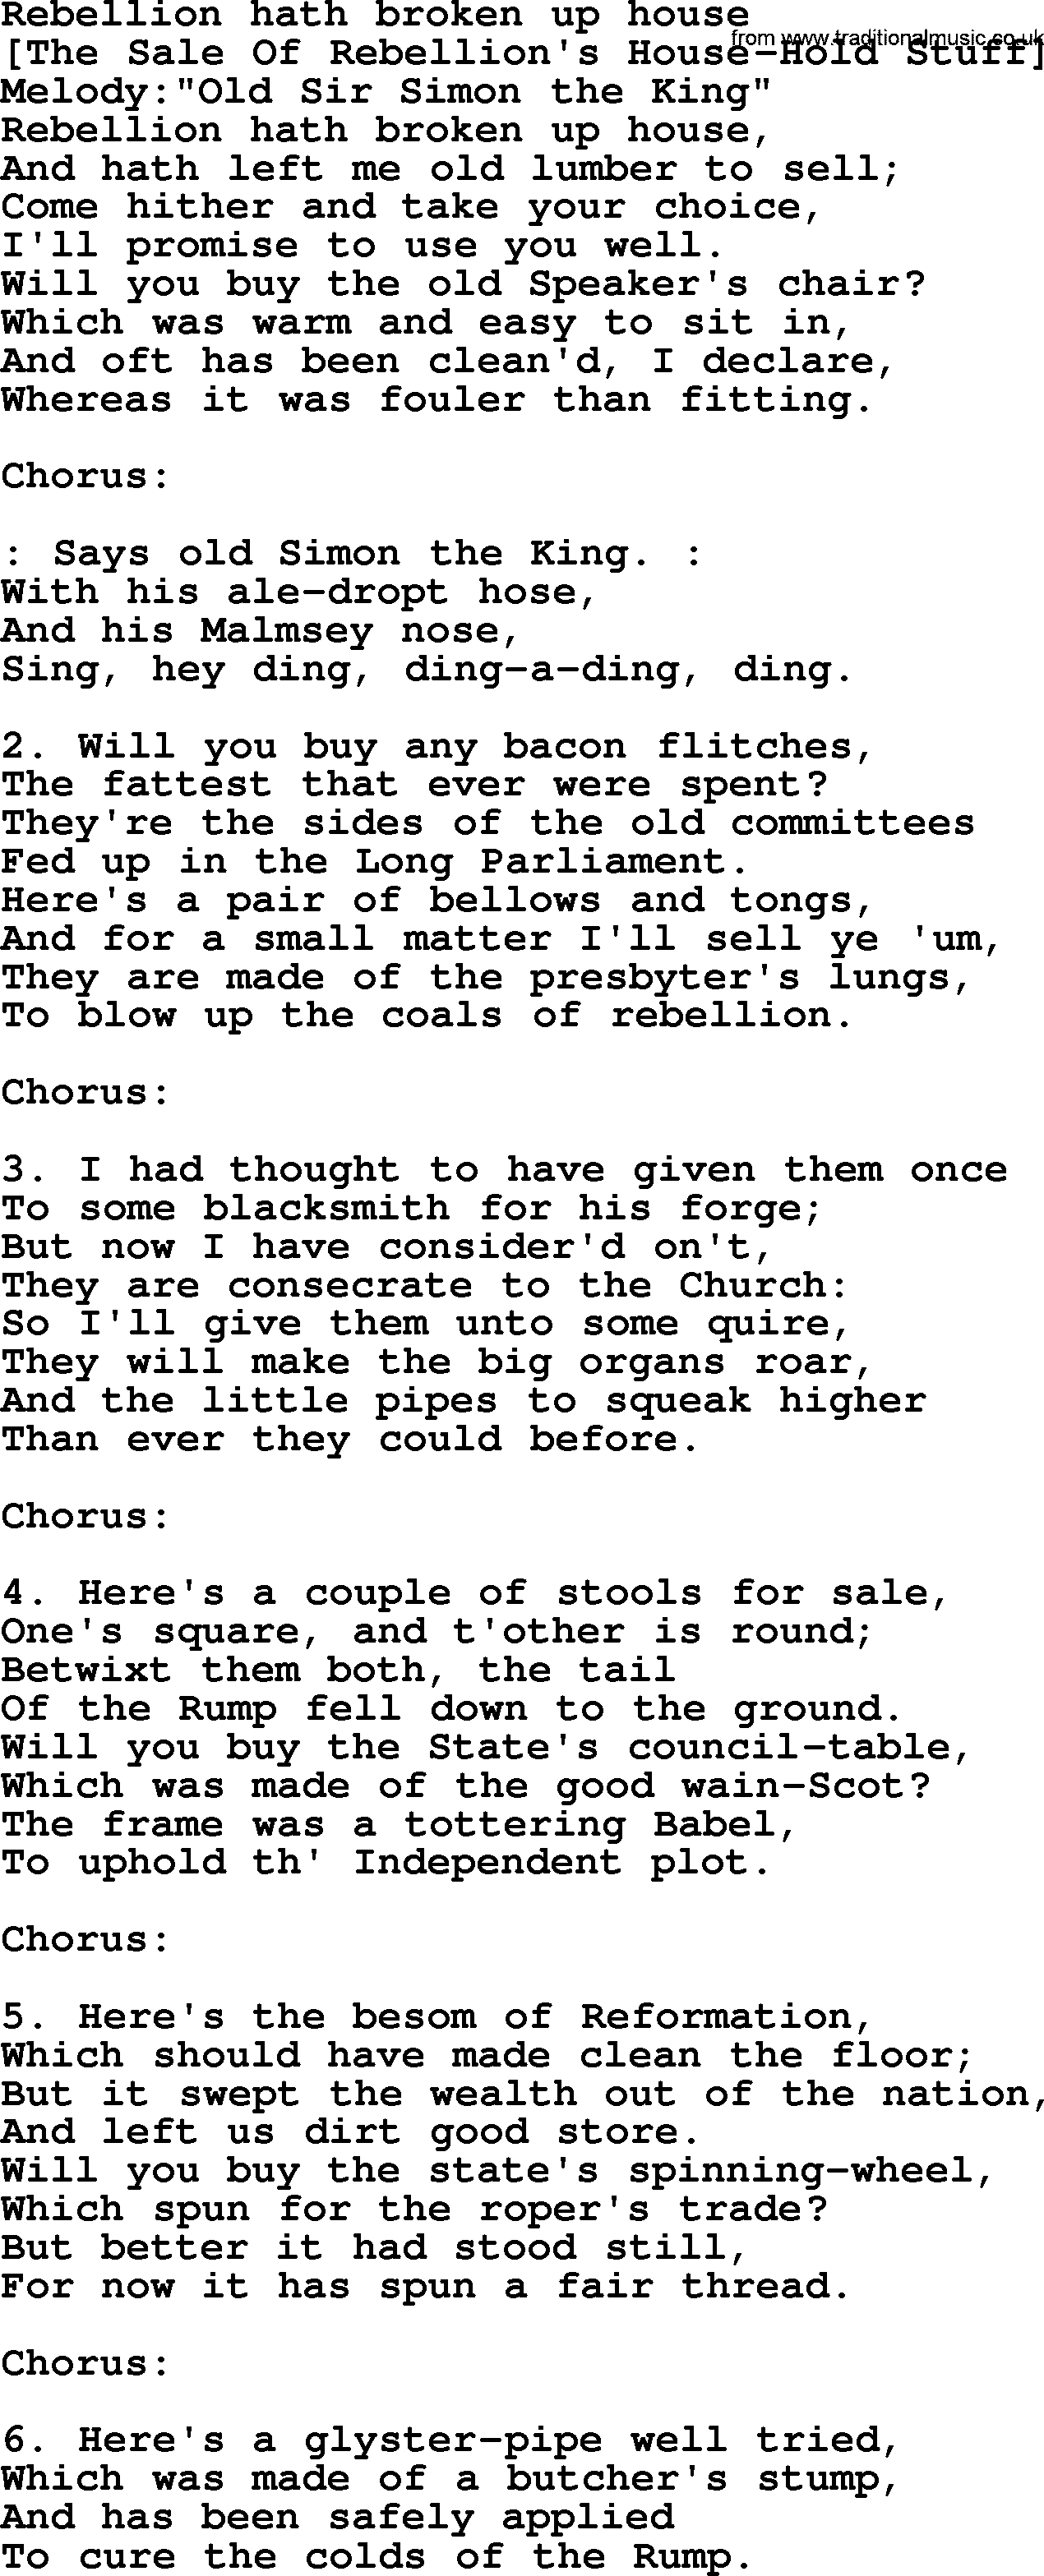 Old English Song: Rebellion Hath Broken Up House lyrics